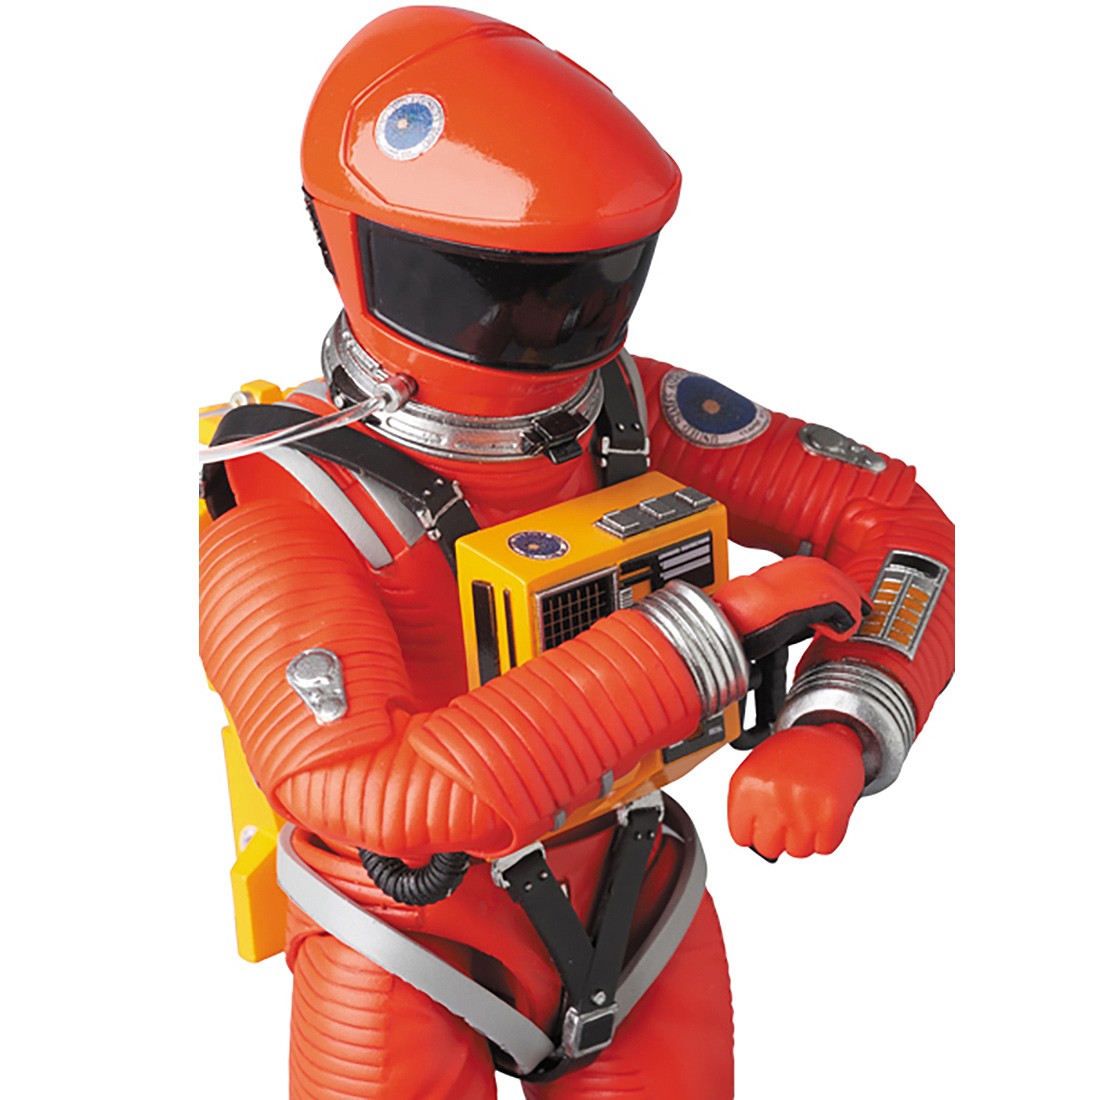 Medicom MAFEX 2001 A Space Odyssey Space Suit Green Helmet And Orange Suit  Ver. Figure (orange)